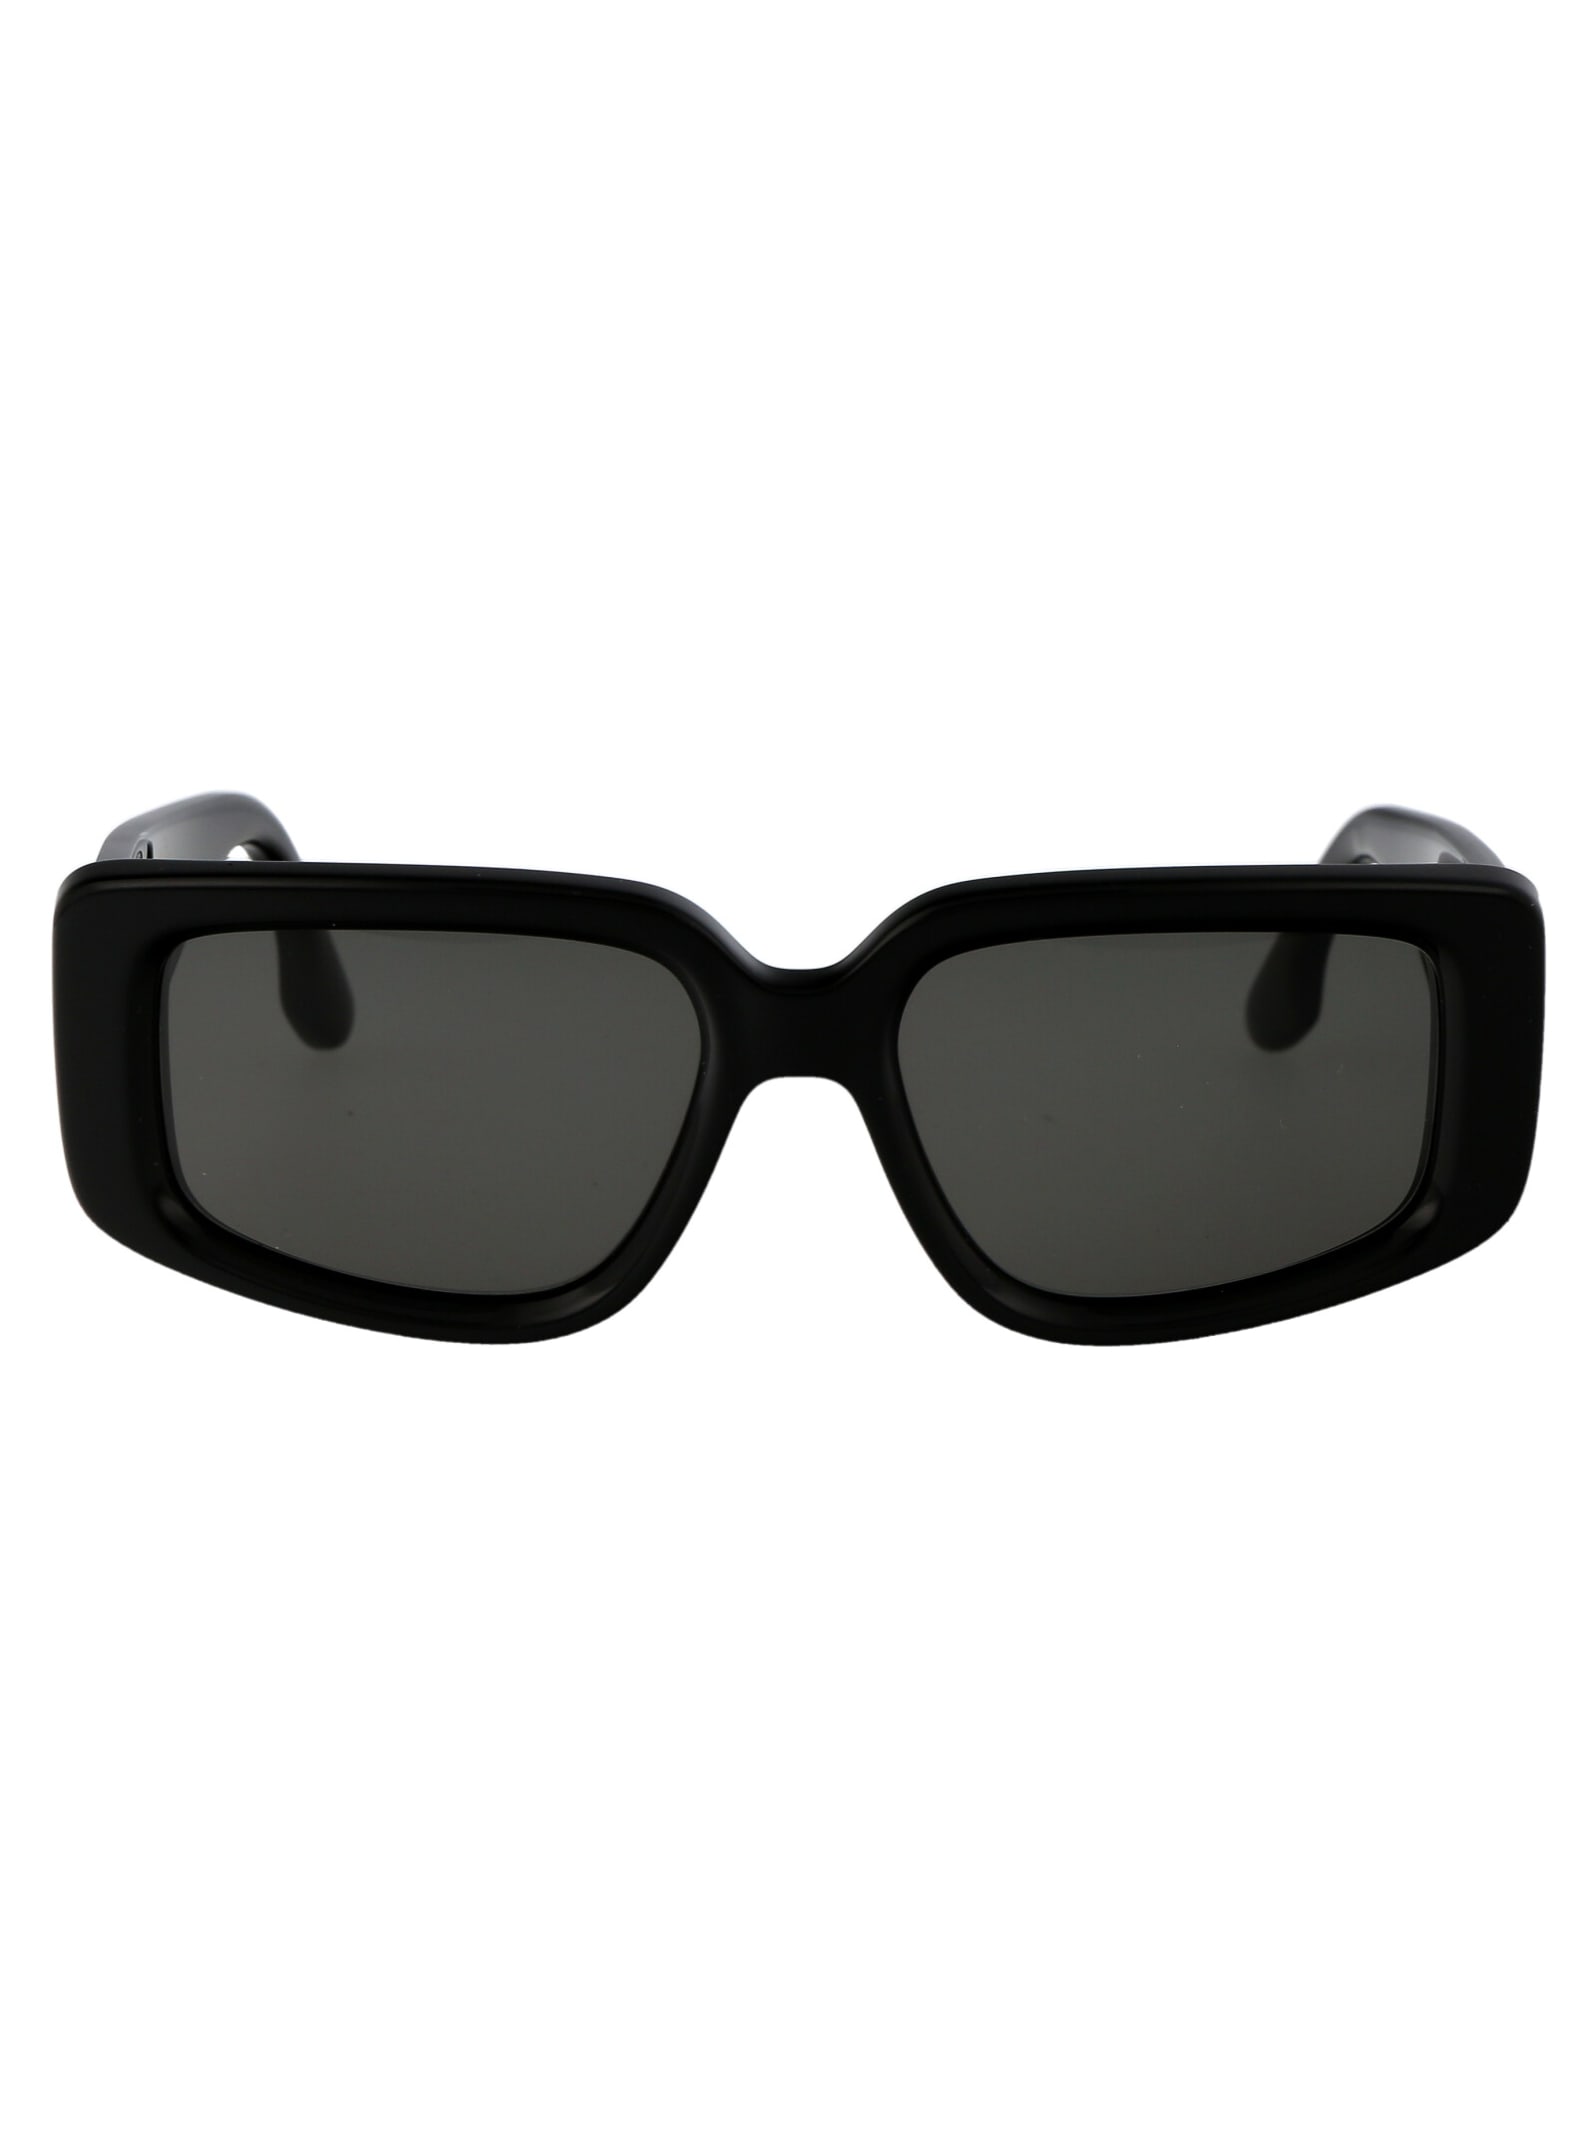 Vb670s Sunglasses